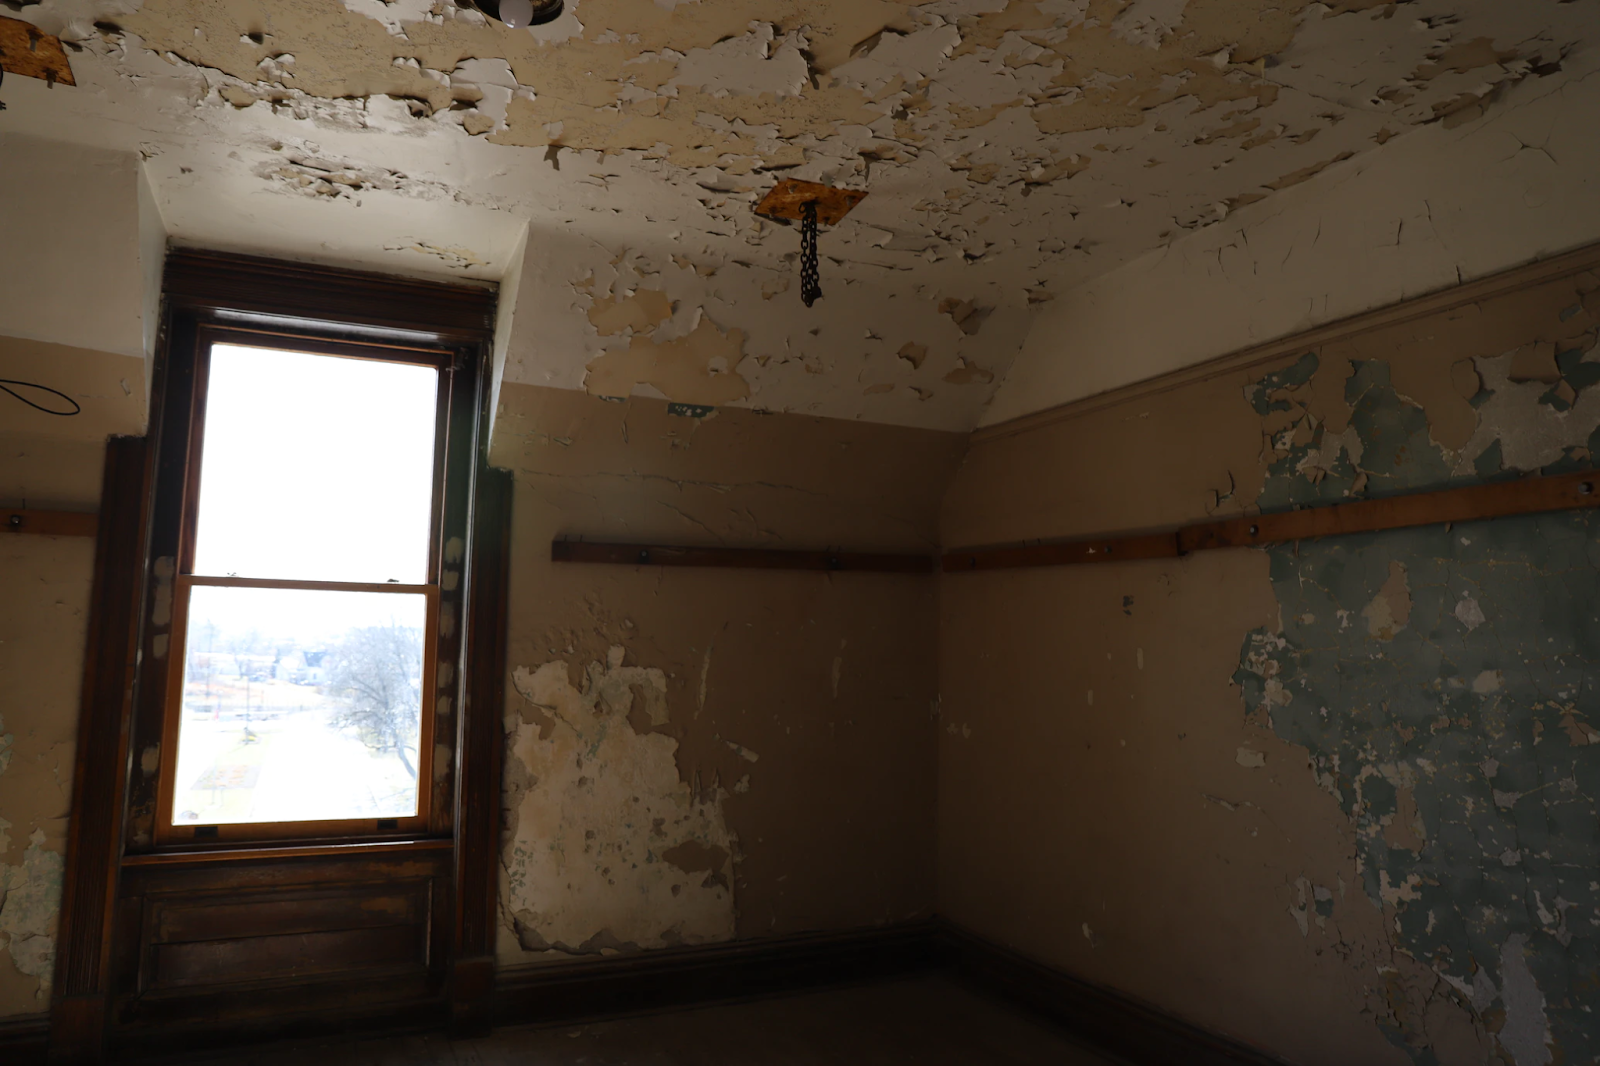 Indoor Air Pollution: The Silent Killer
house | Photo by Michael & Diane Weidner on Unsplash | https://unsplash.com/s/photos/mold?utm_source=unsplash&utm_medium=referral&utm_content=creditCopyText
